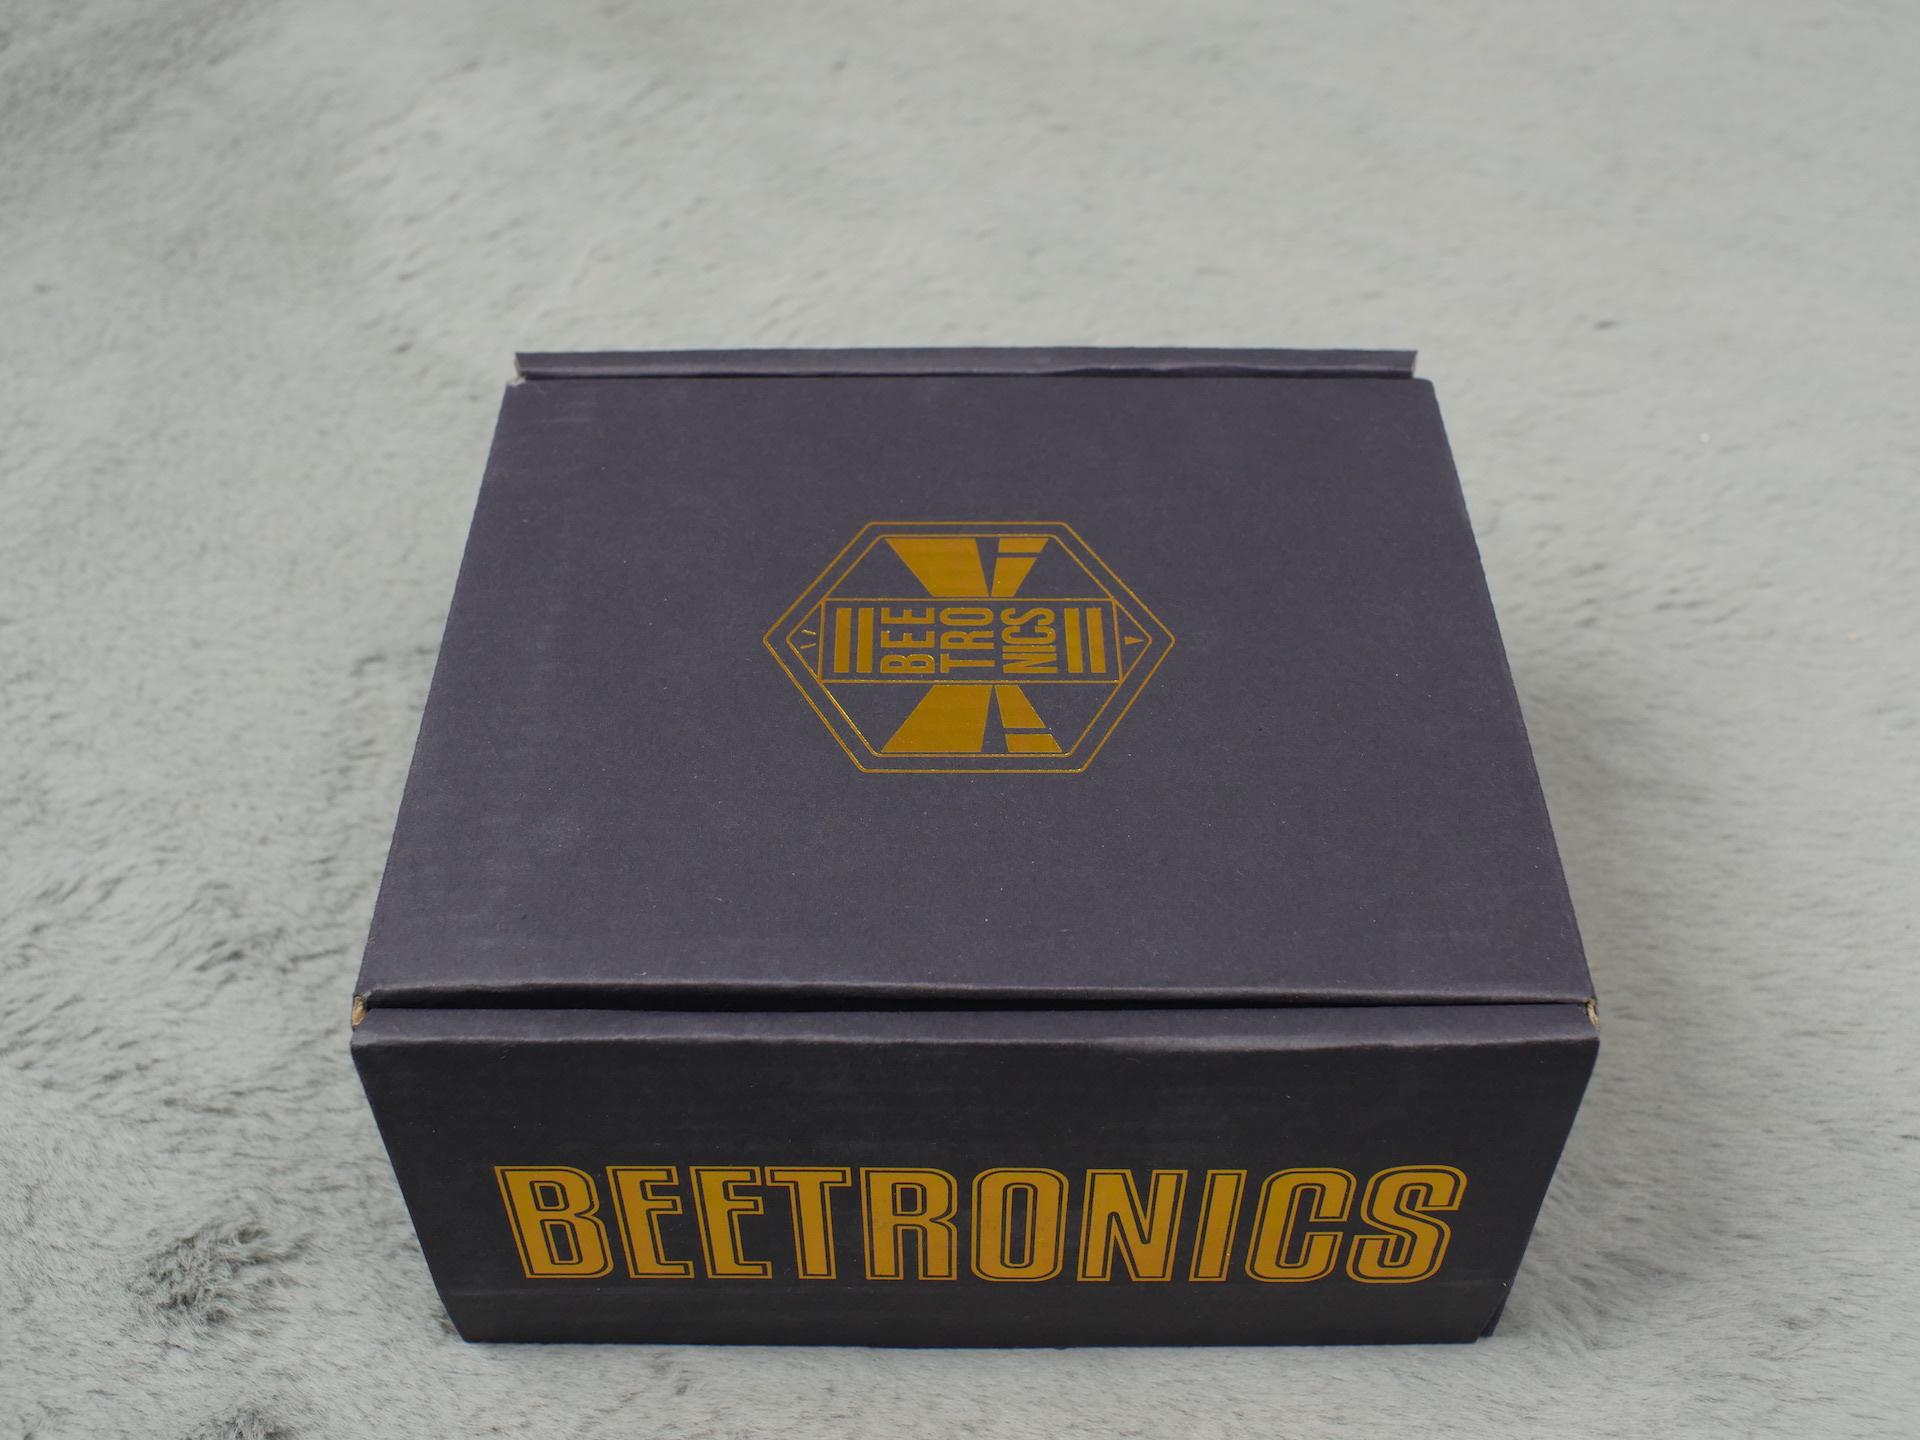 Beetronics Octahive